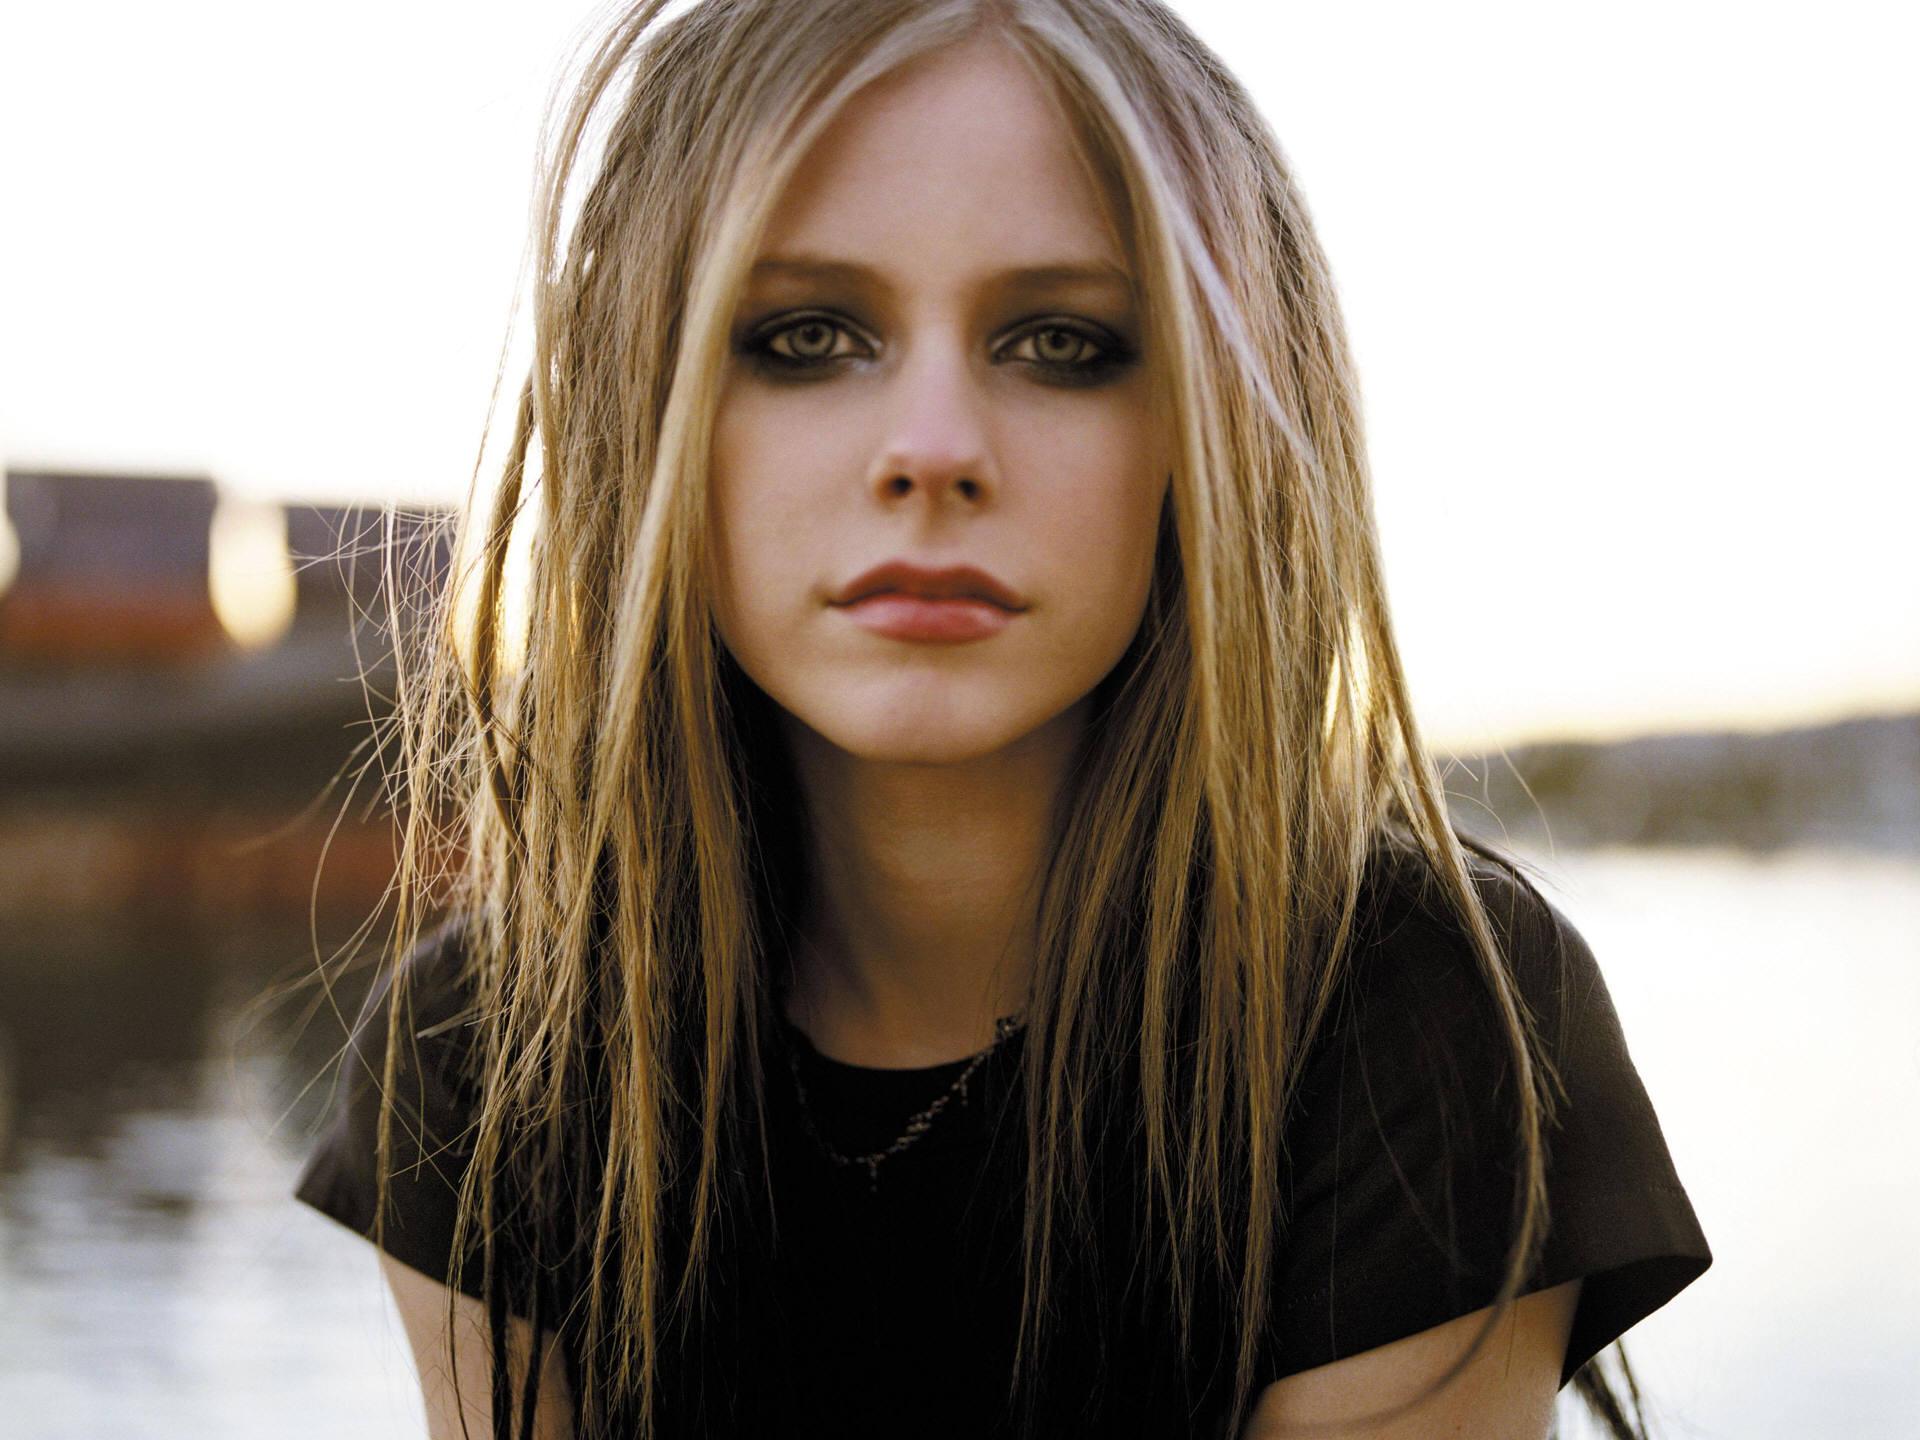 https://www.venus.com.py/wp-content/uploads/2017/01/Avril-Lavigne.jpg